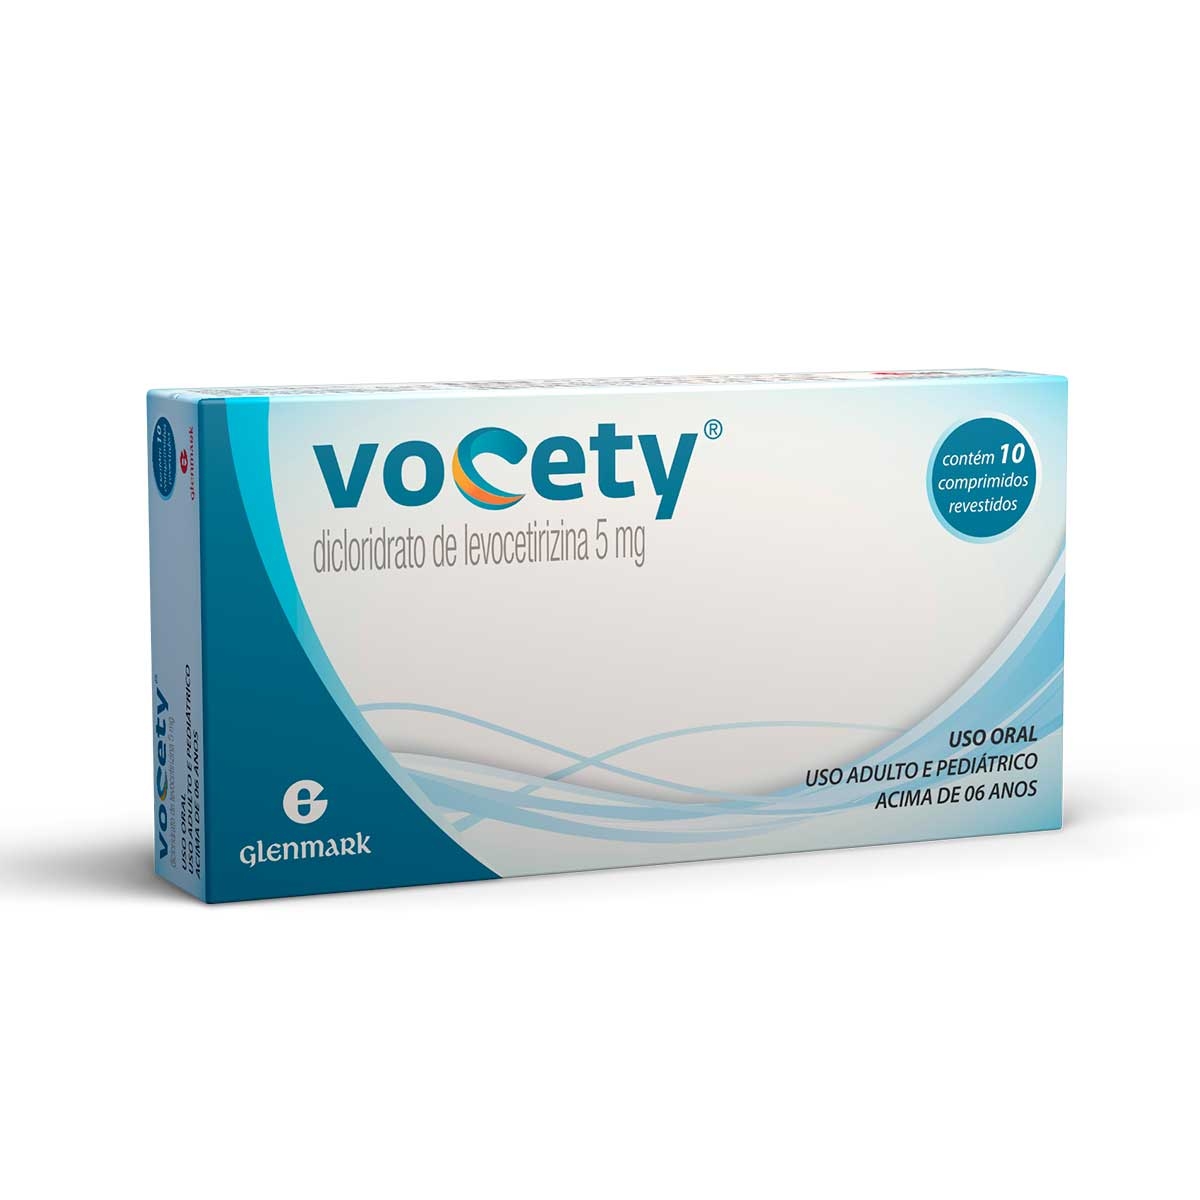 Vocety 5mg - Dicloridrato de Levocetirizina - 10 comprimidos